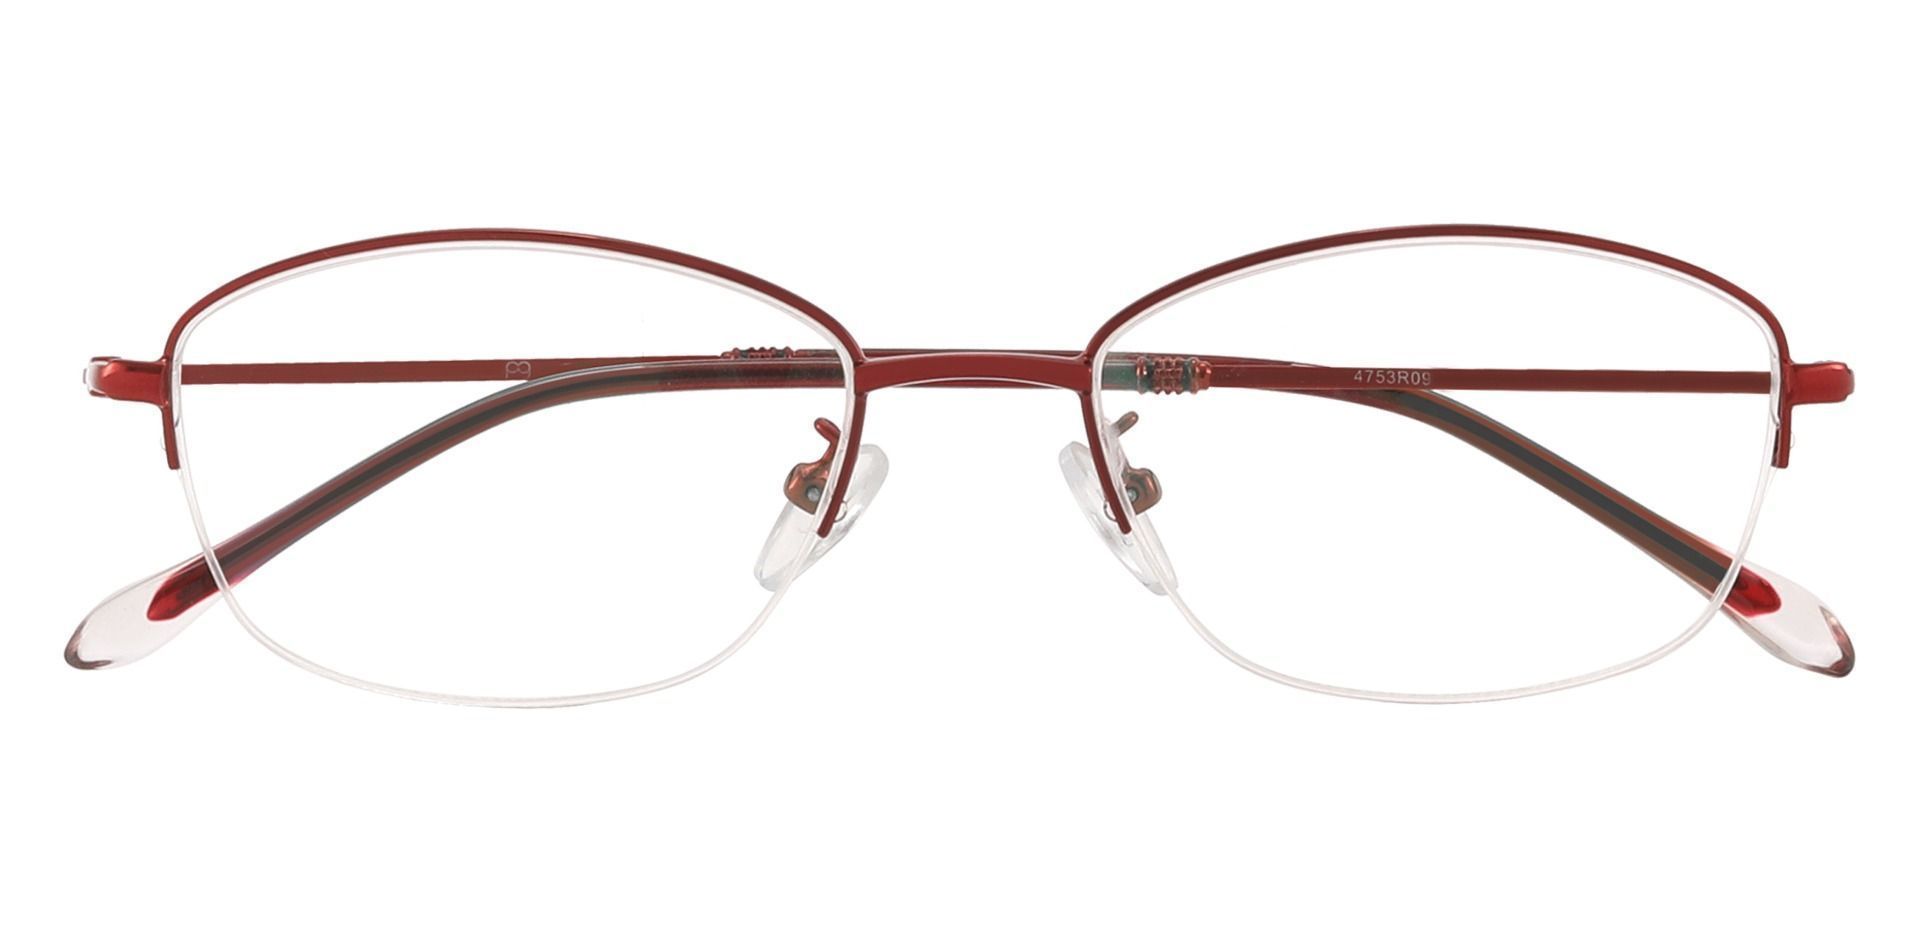 Mendoza Oval Reading Glasses - Red